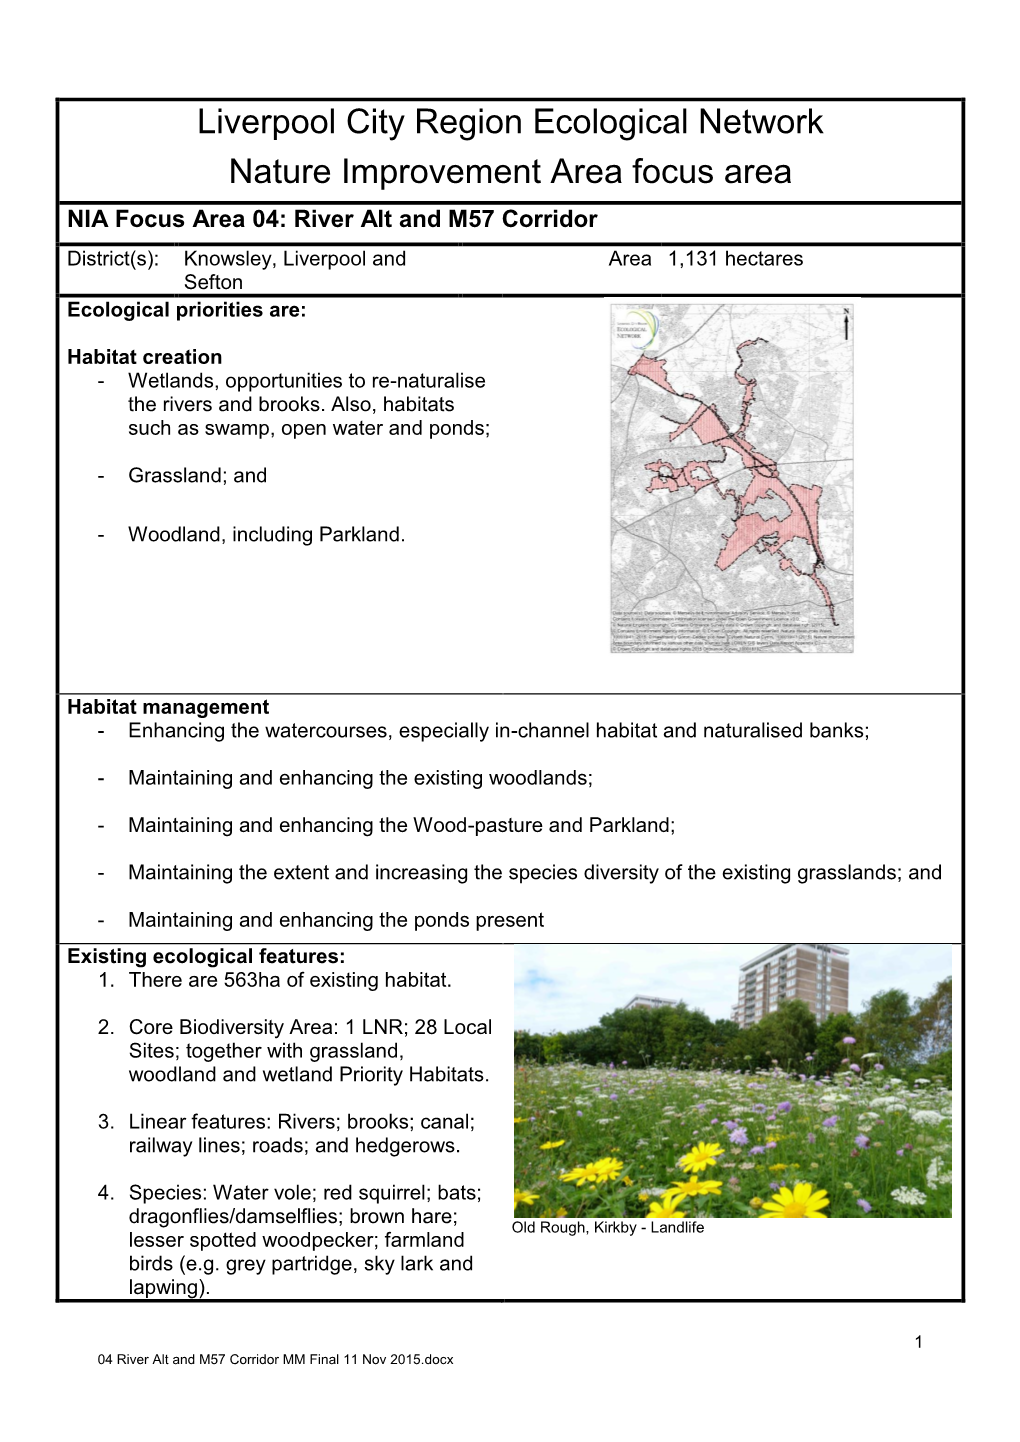 Liverpool City Region Ecological Network Nature Improvement Area